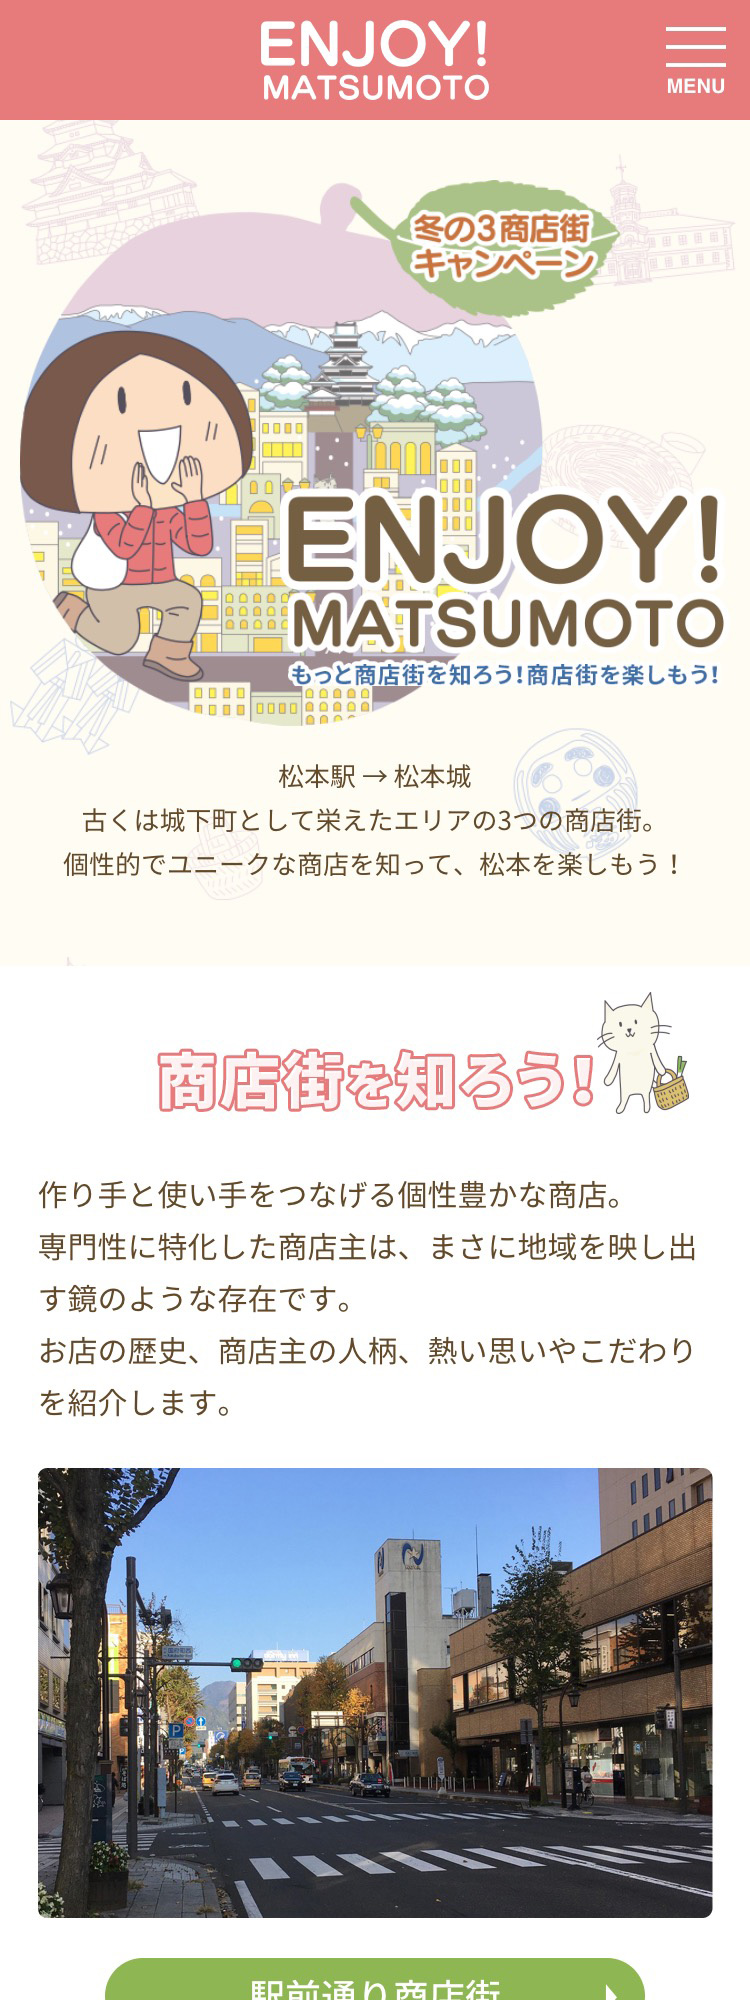 ENJOY！MATSUMOTO 冬の3商店街キャンペーン